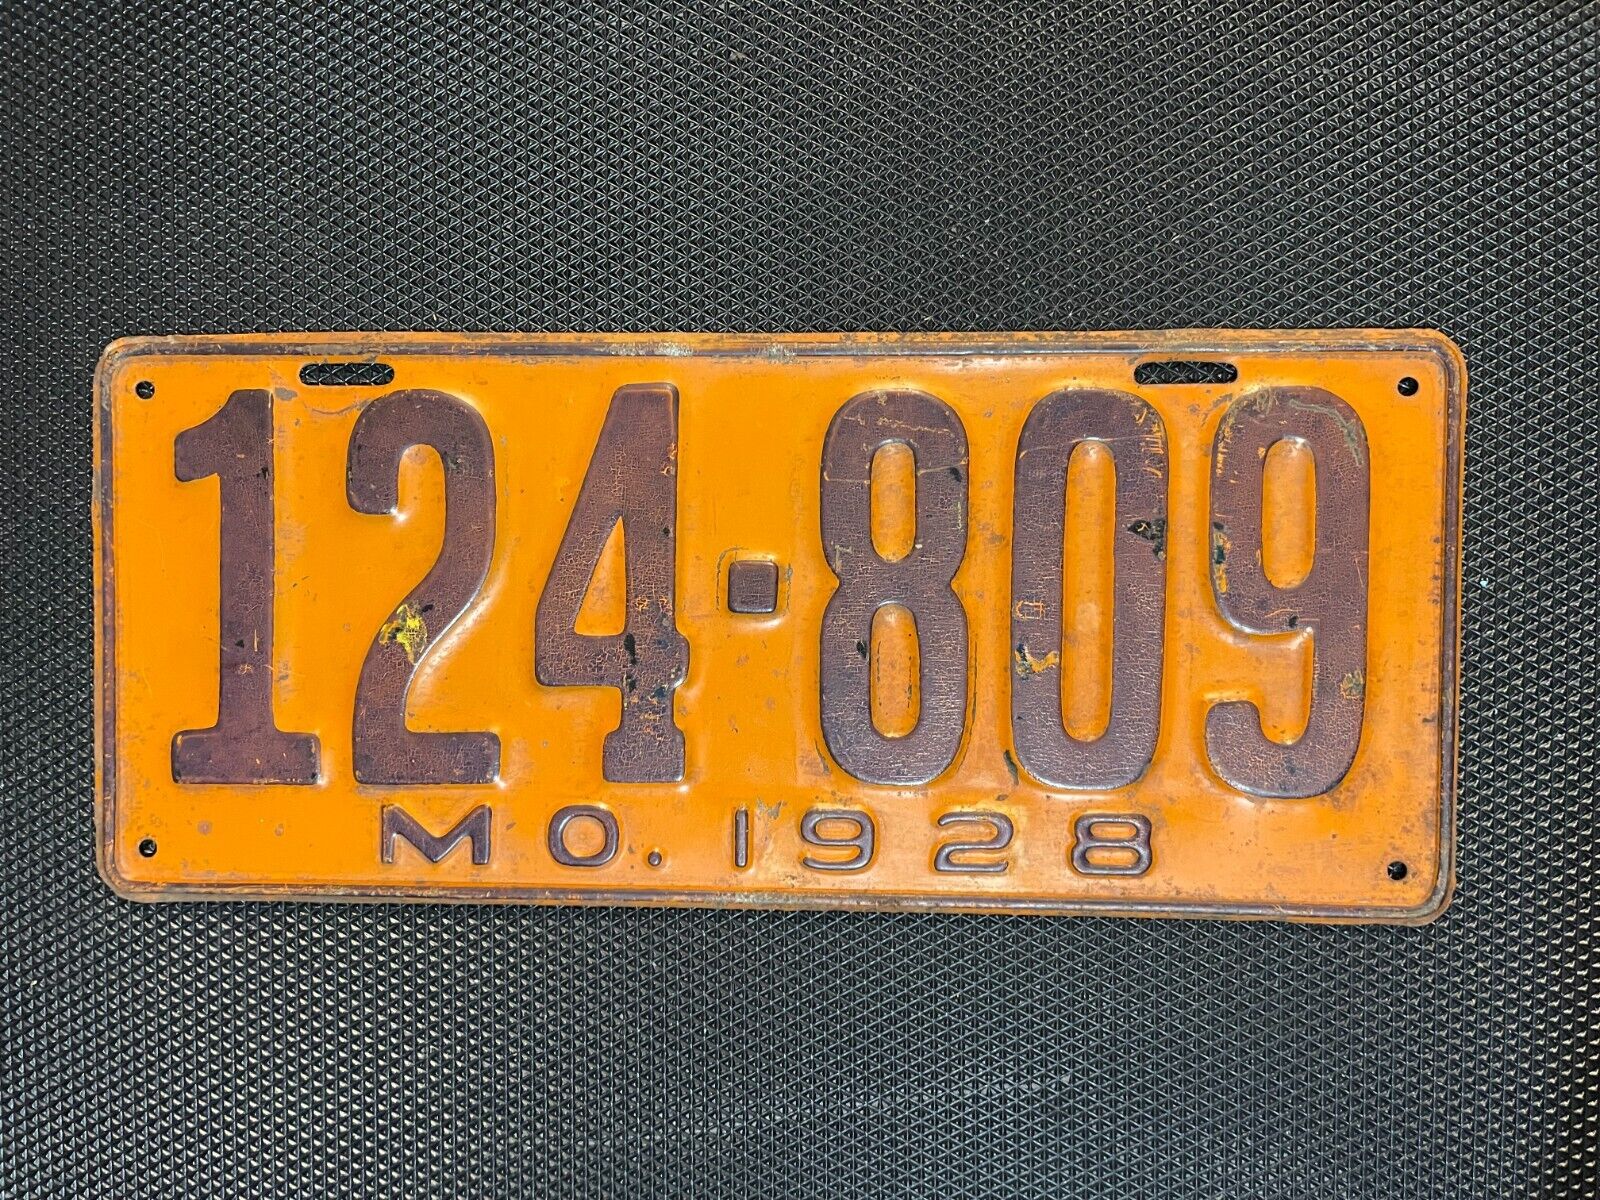 MISSOURI LICENSE PLATE 1928 124 809